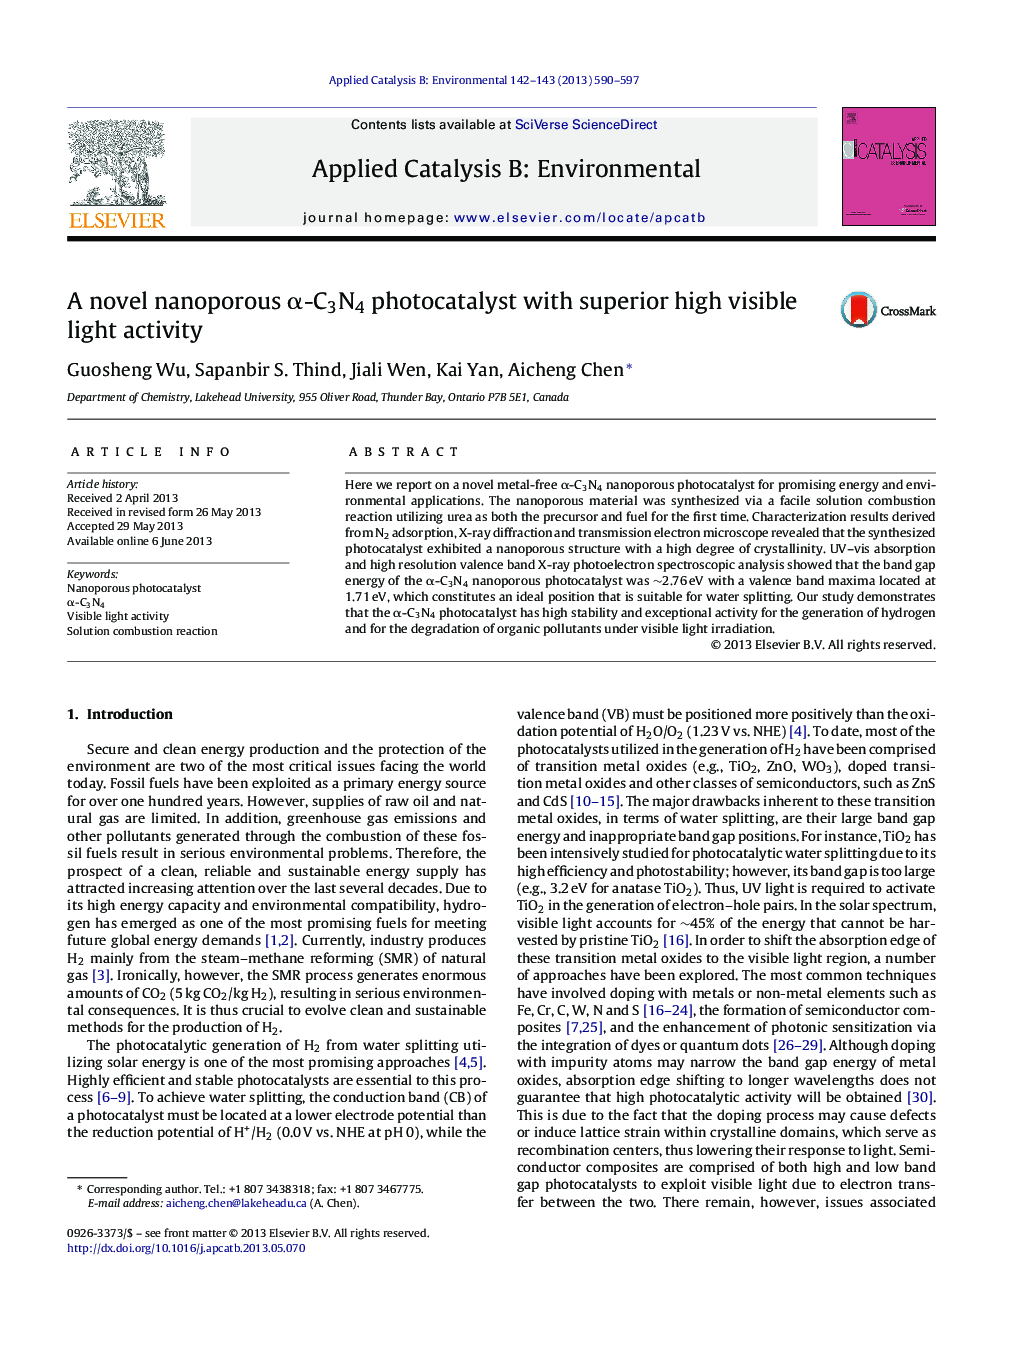 A novel nanoporous Î±-C3N4 photocatalyst with superior high visible light activity